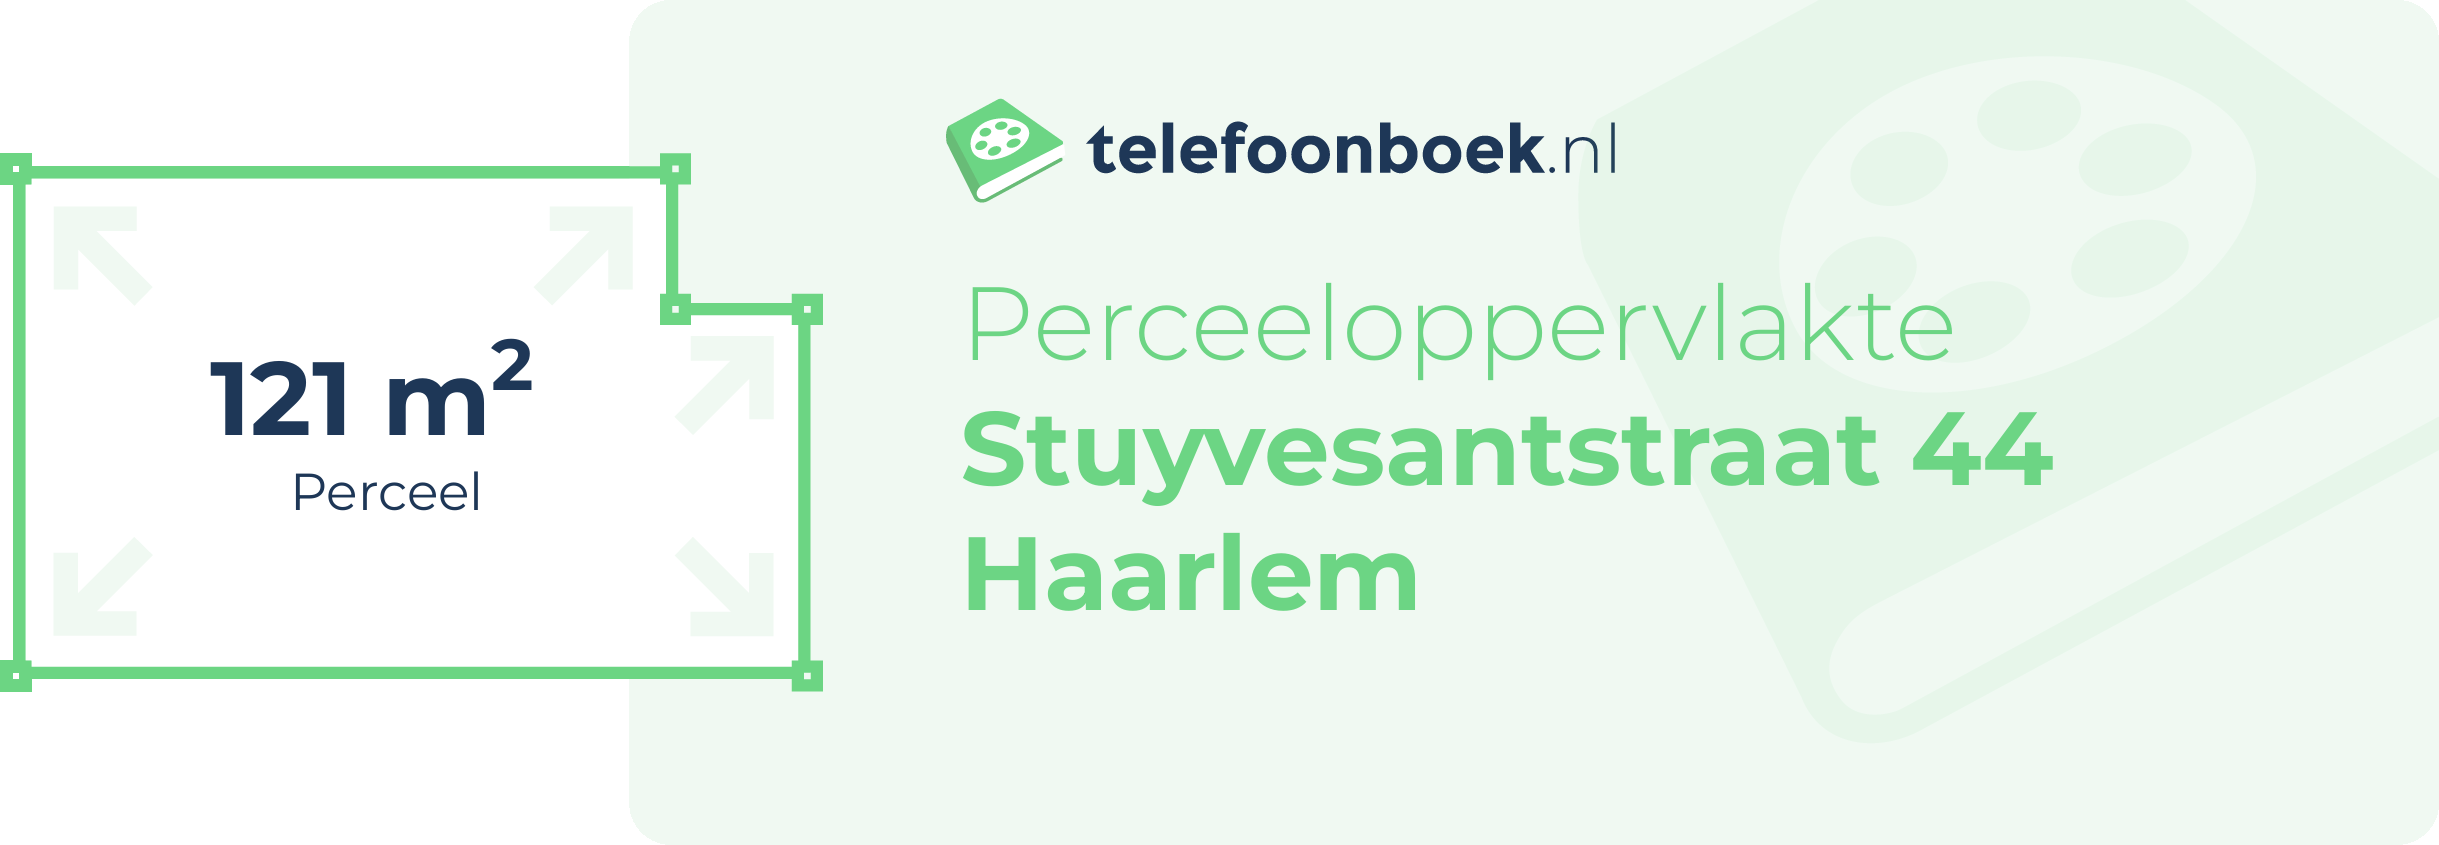 Perceeloppervlakte Stuyvesantstraat 44 Haarlem